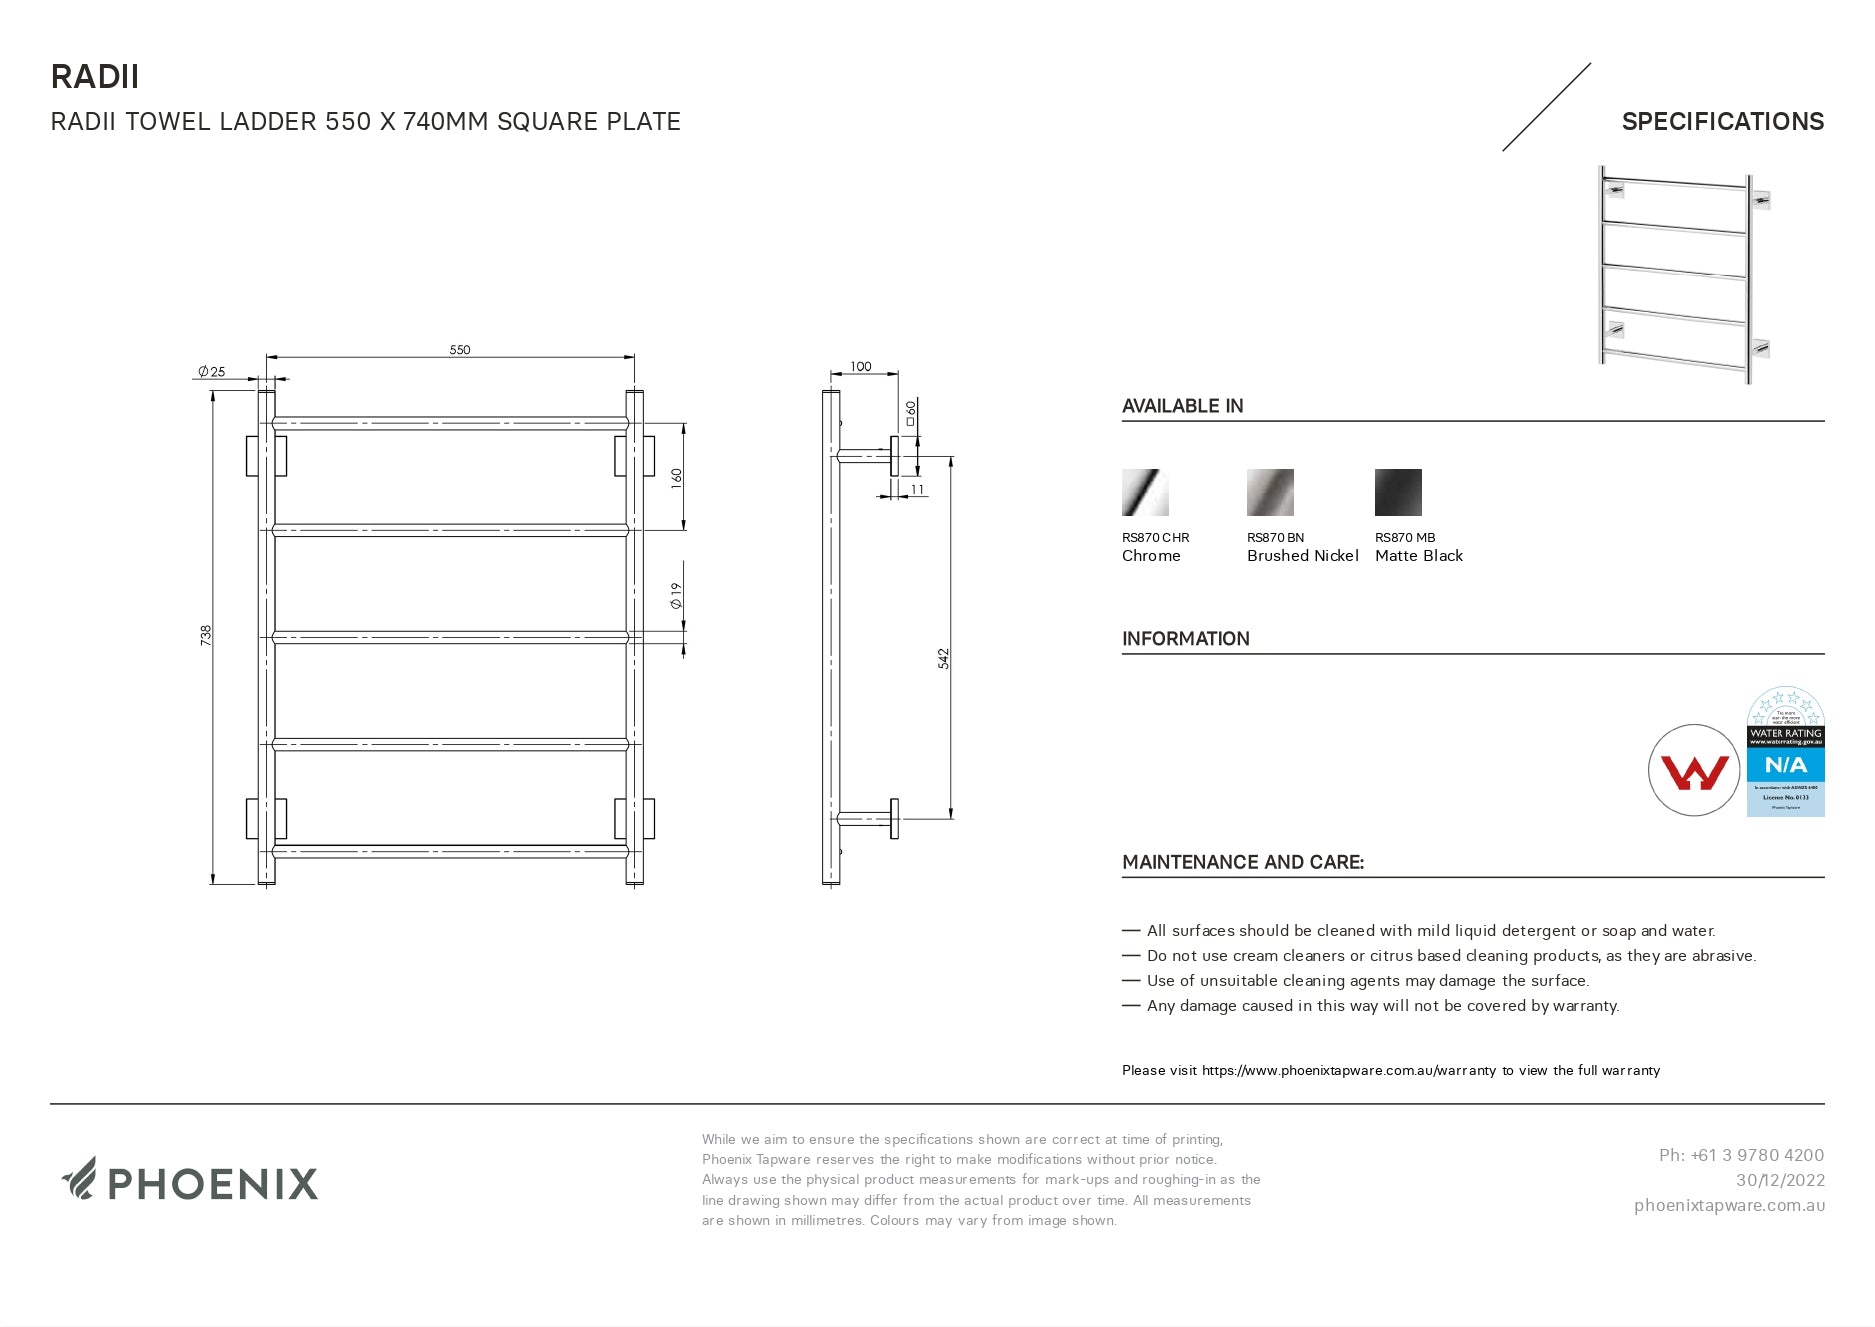 PHOENIX RADII NON-HEATED TOWEL LADDER SQUARE PLATE MATTE BLACK 550MM X 740MM